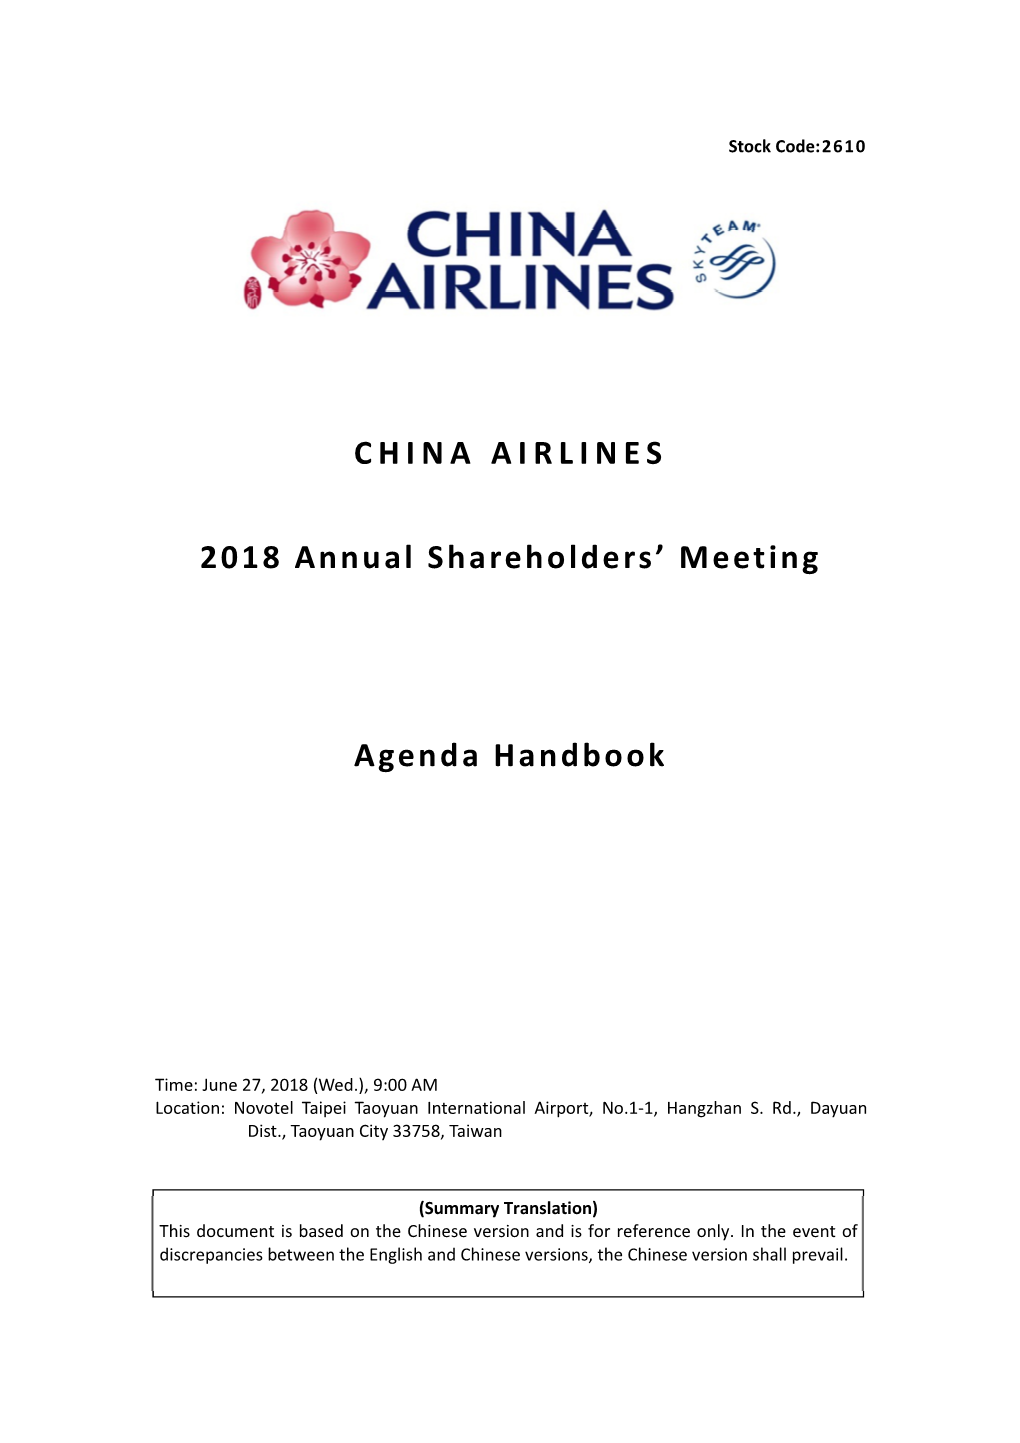 China Airlines 2018 Annual Shareholders' Meeting Agenda